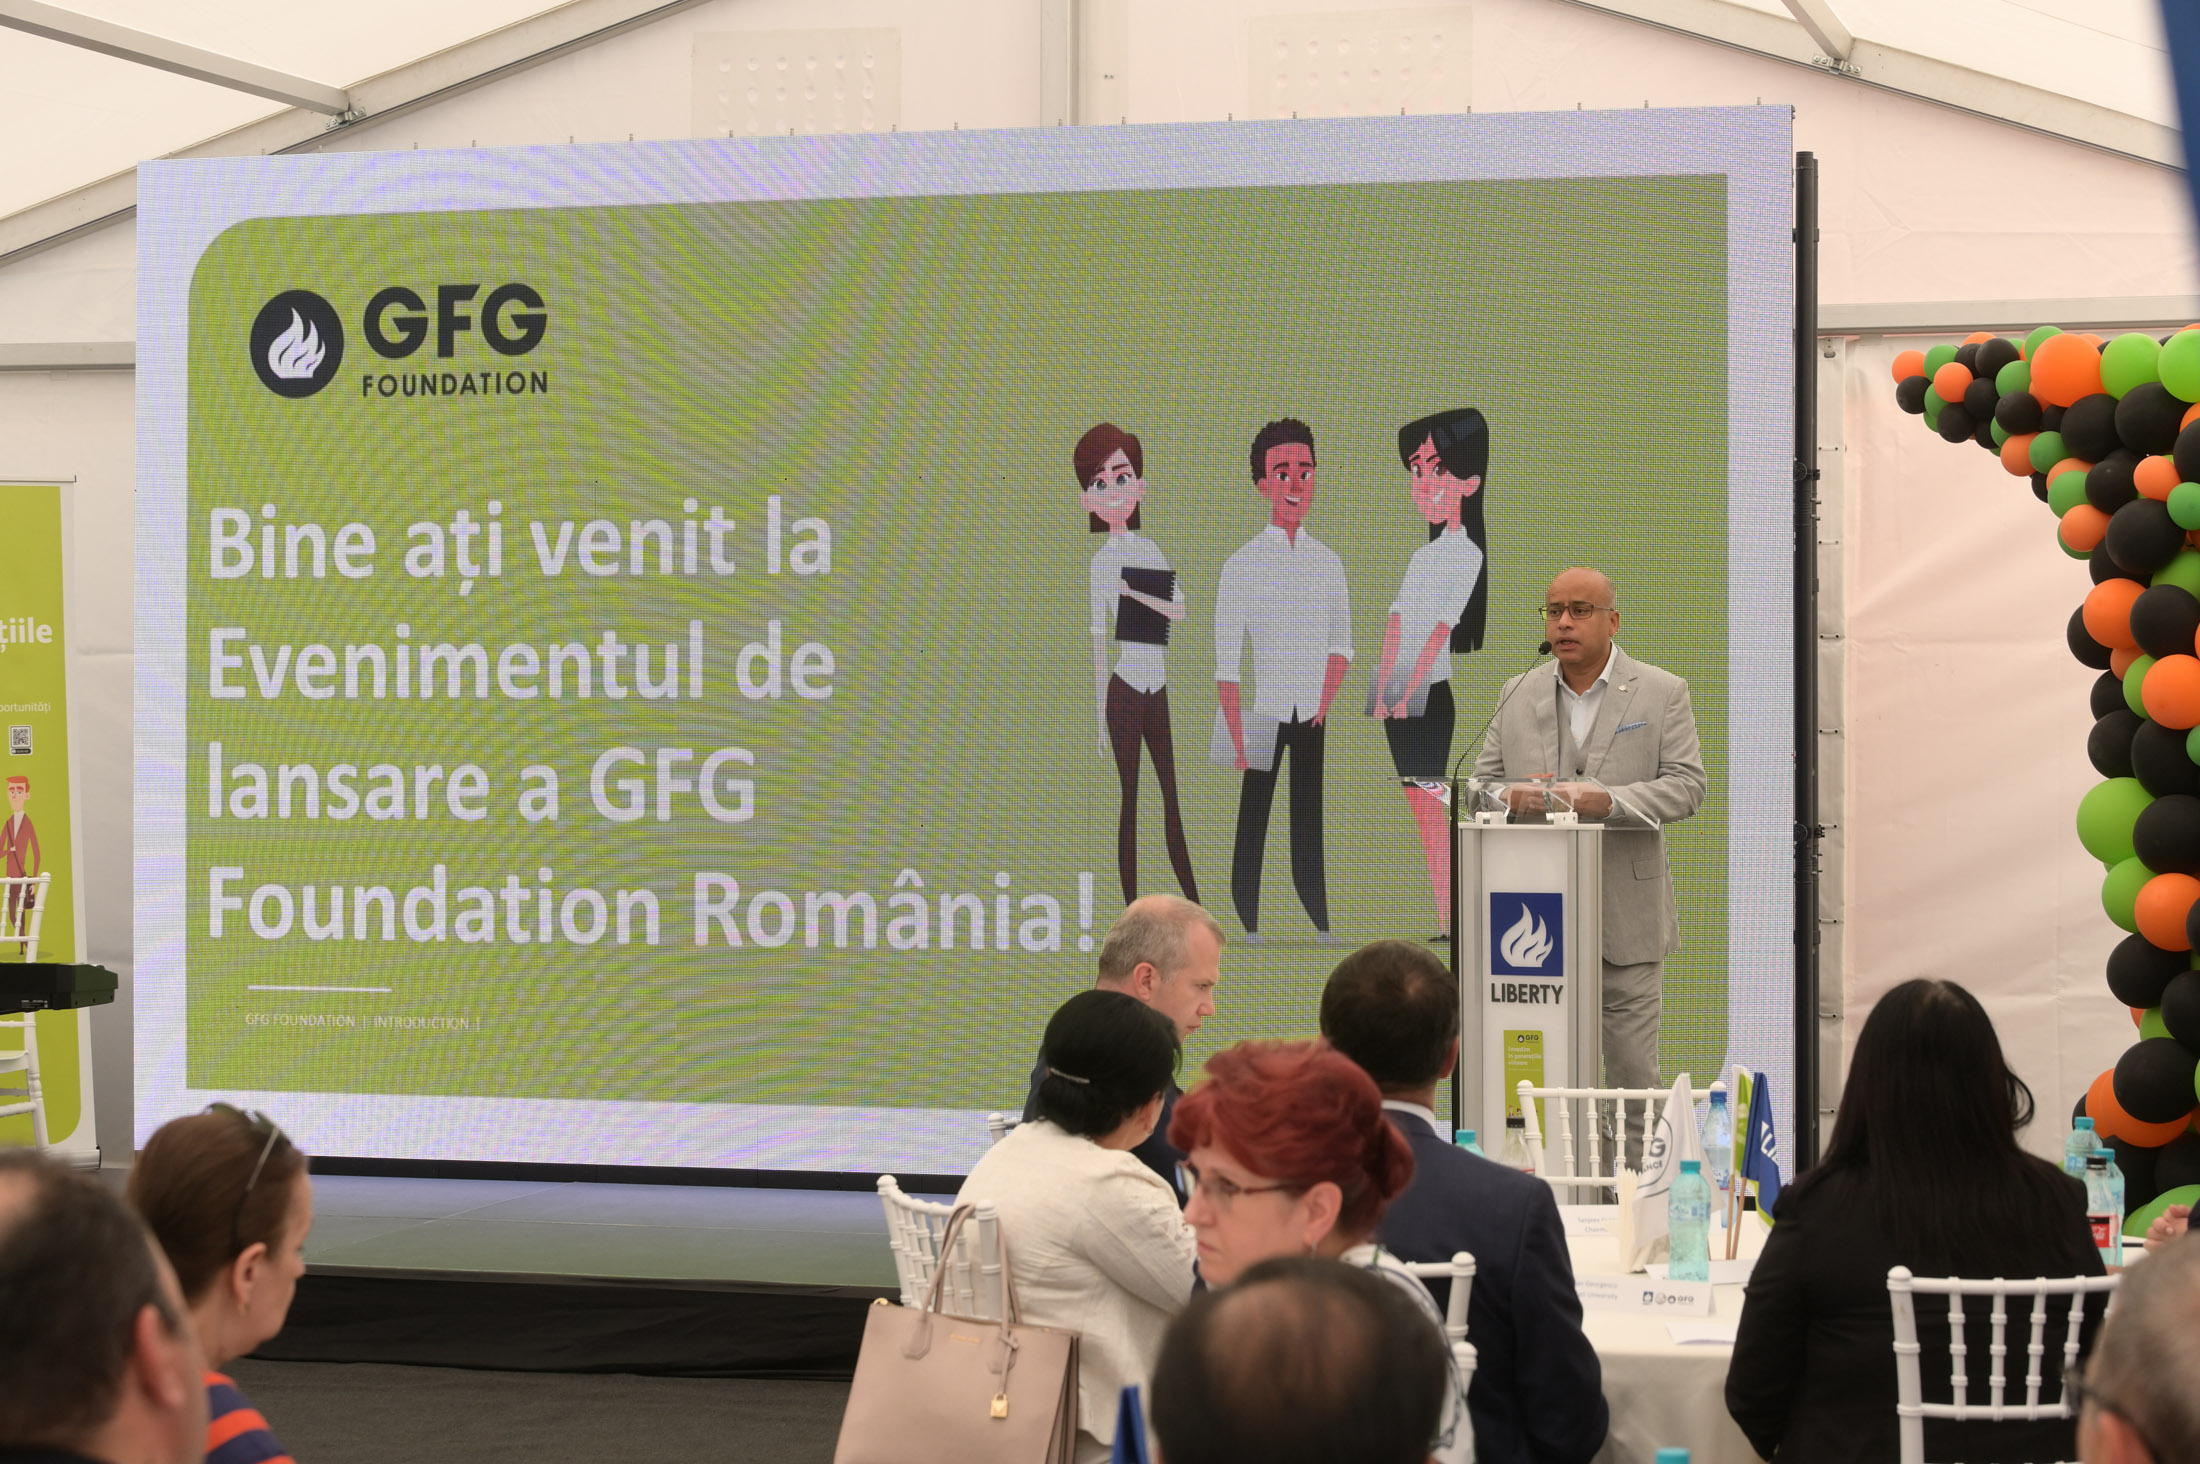 GFG Stiftung expandiert nach Rumänien